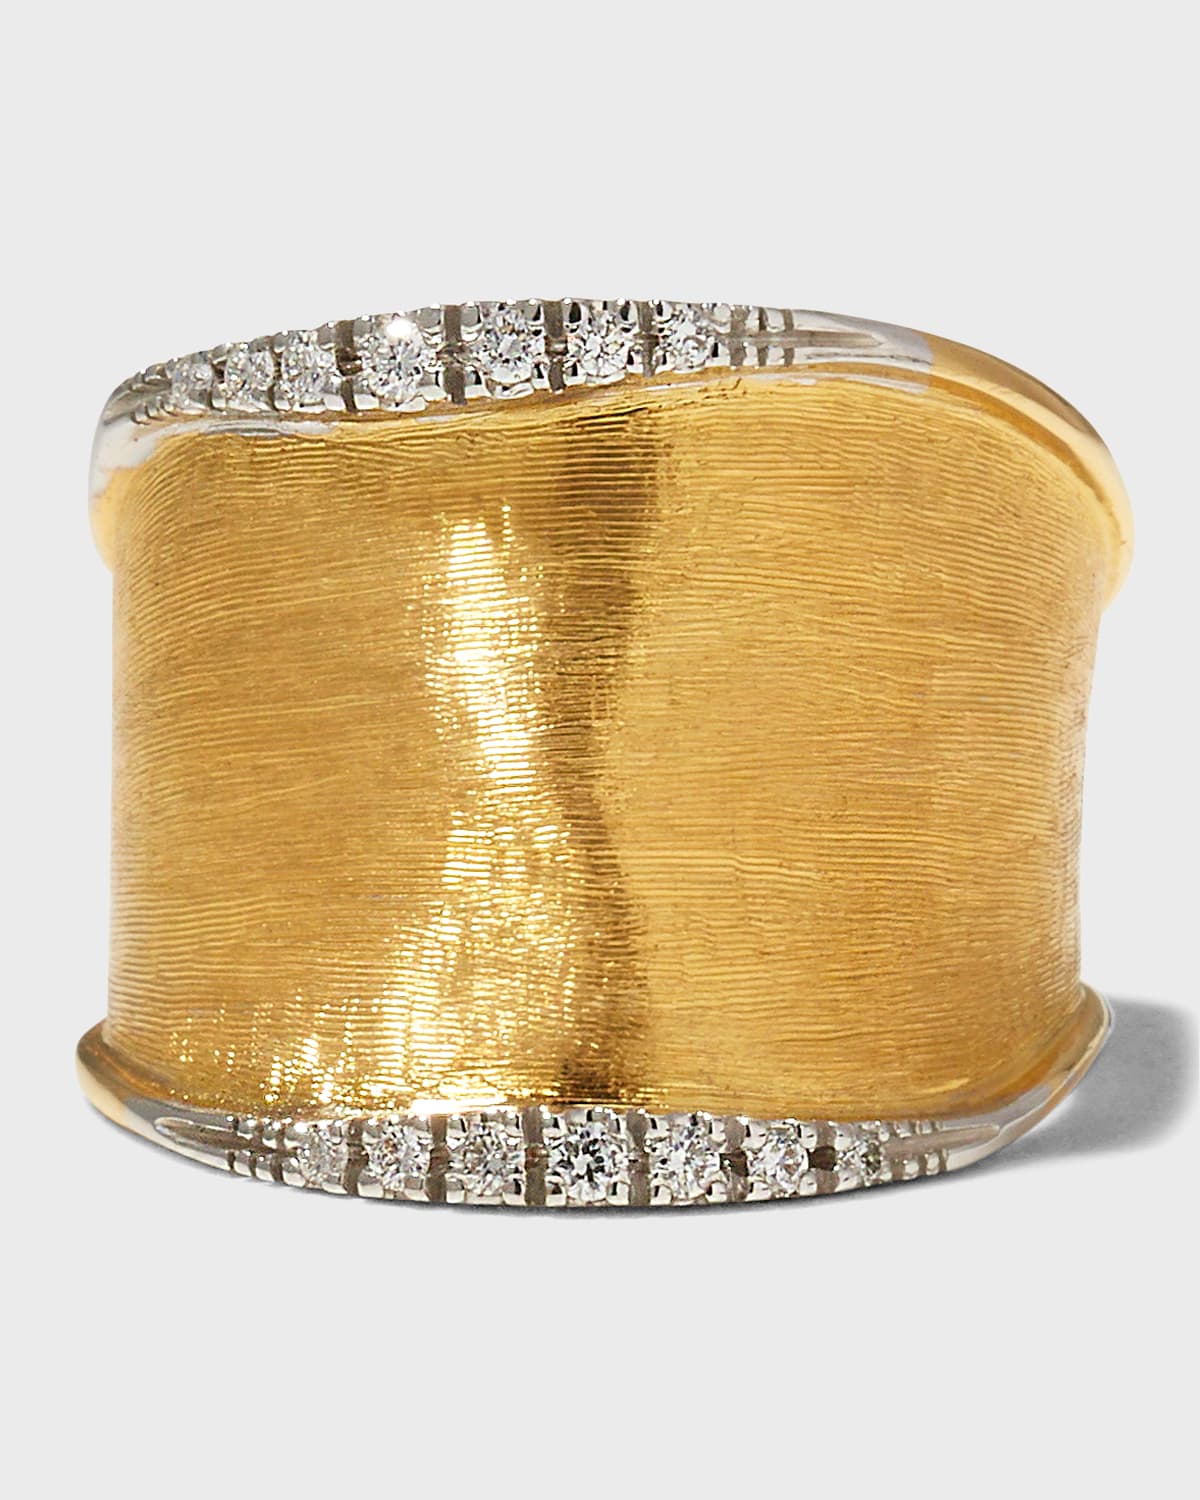 Lunaria 18K Gold Medium Band Ring with Diamonds, Size 7